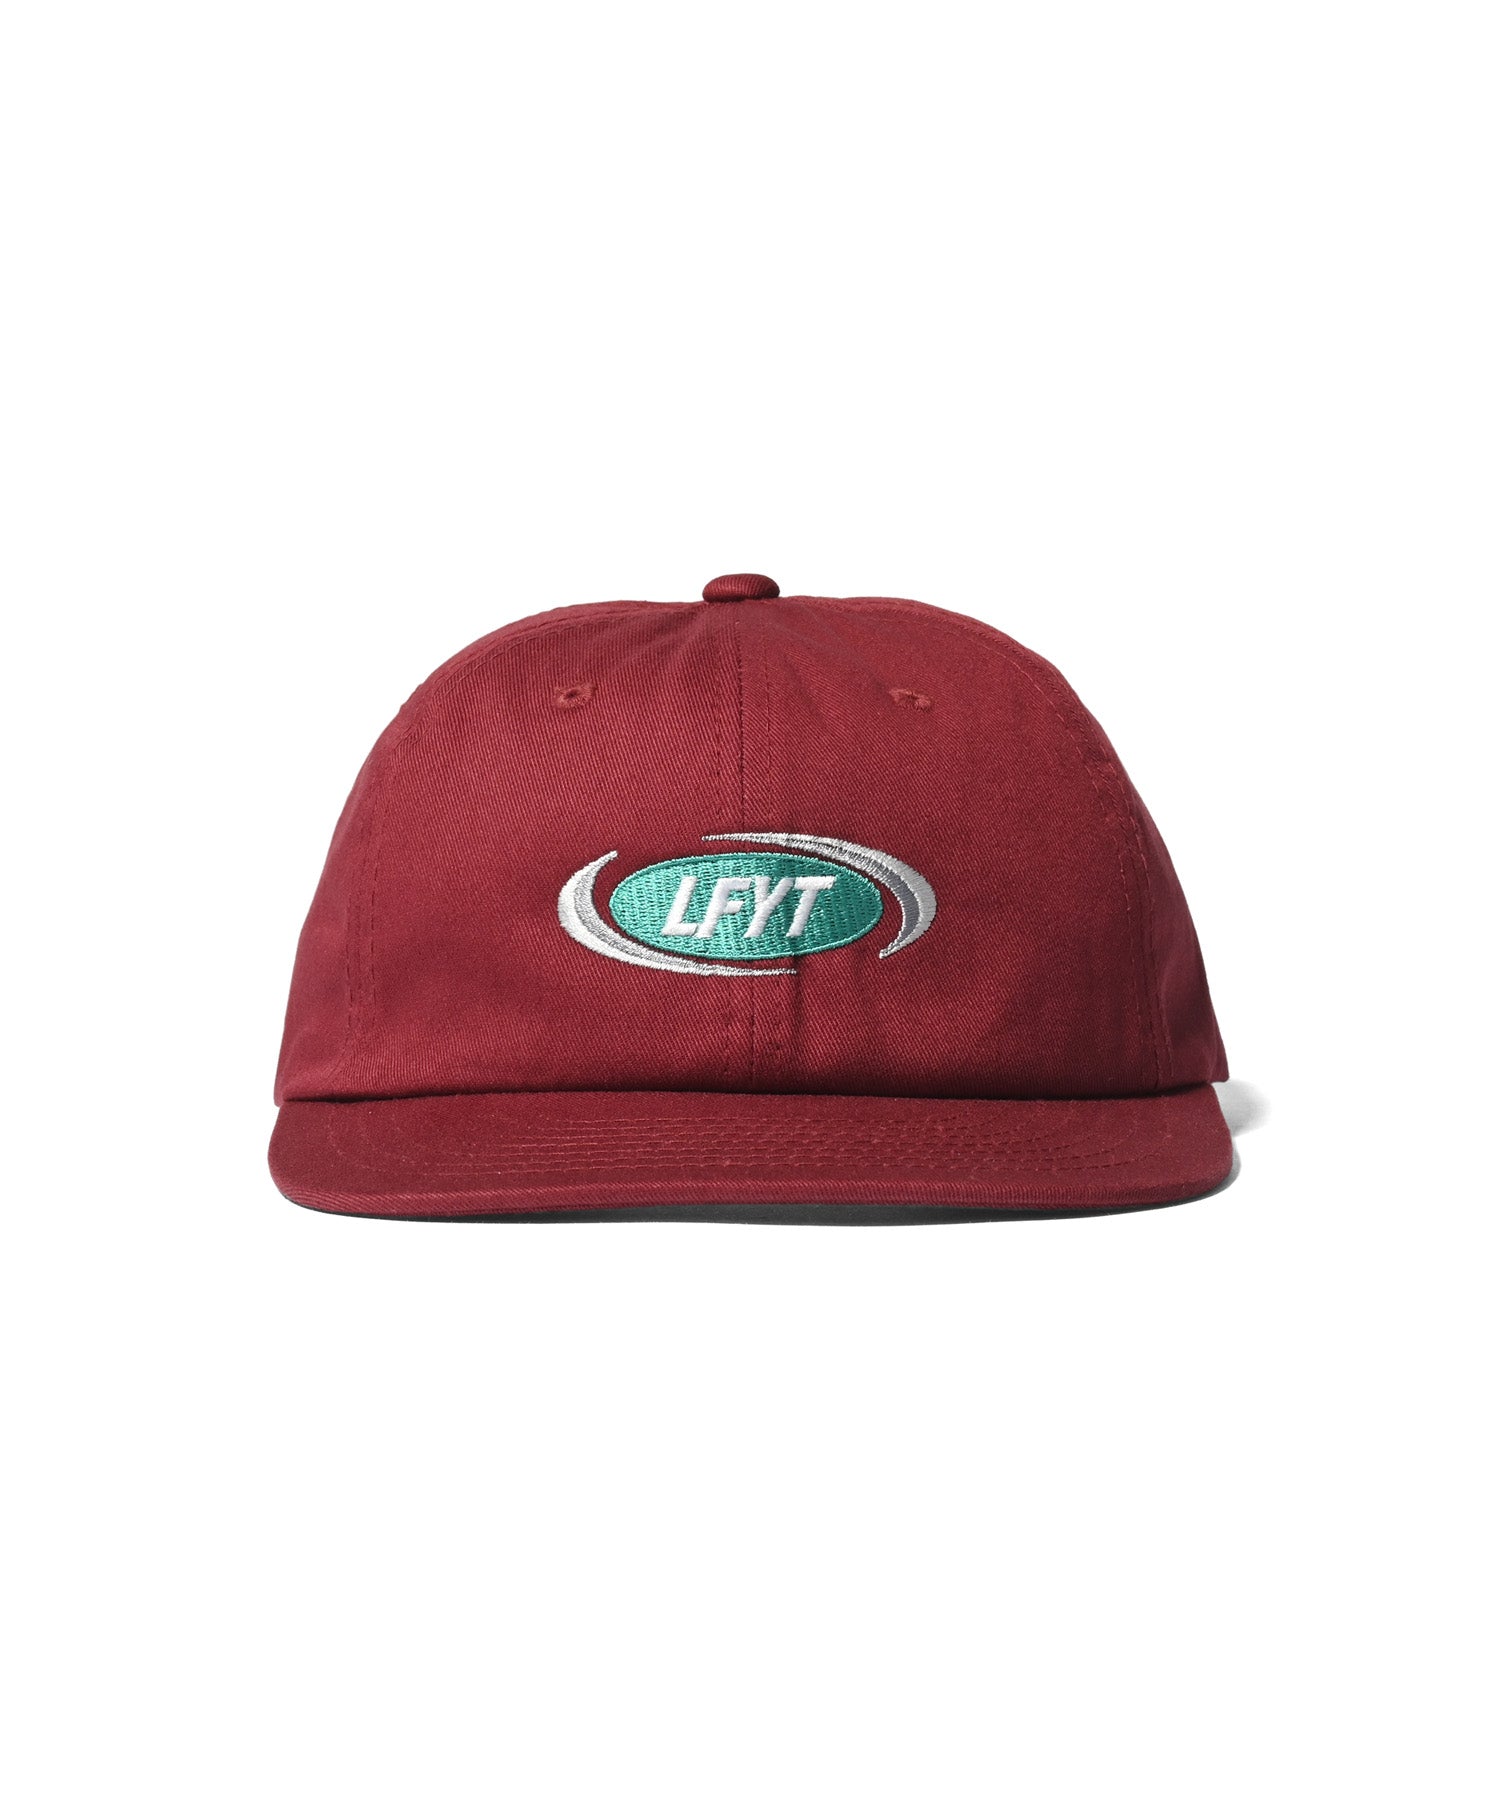 LFYT 橢圓形標誌平頂遮陽帽 LS231412